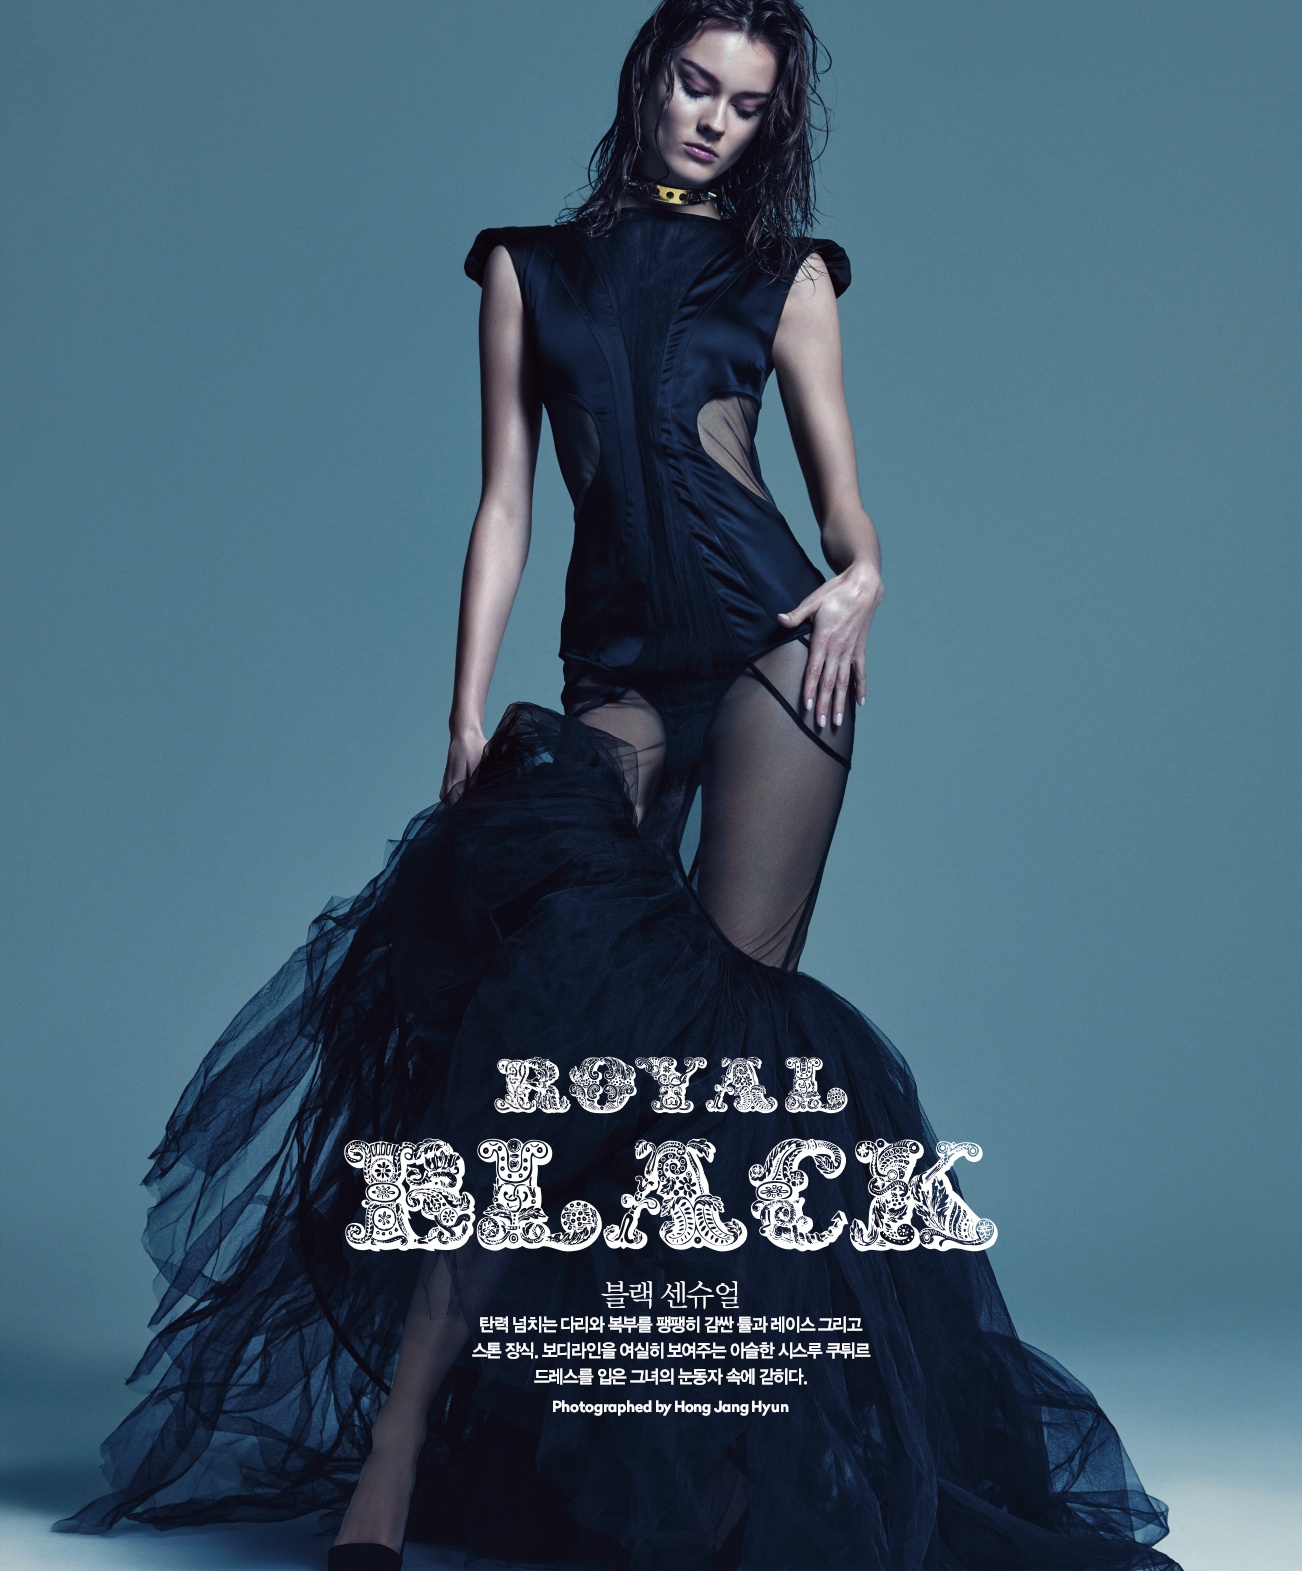 monika_jagaciak_by_hong_jang_hyun_(royal_black_-_singles_korea_march_2014)_1.jpg